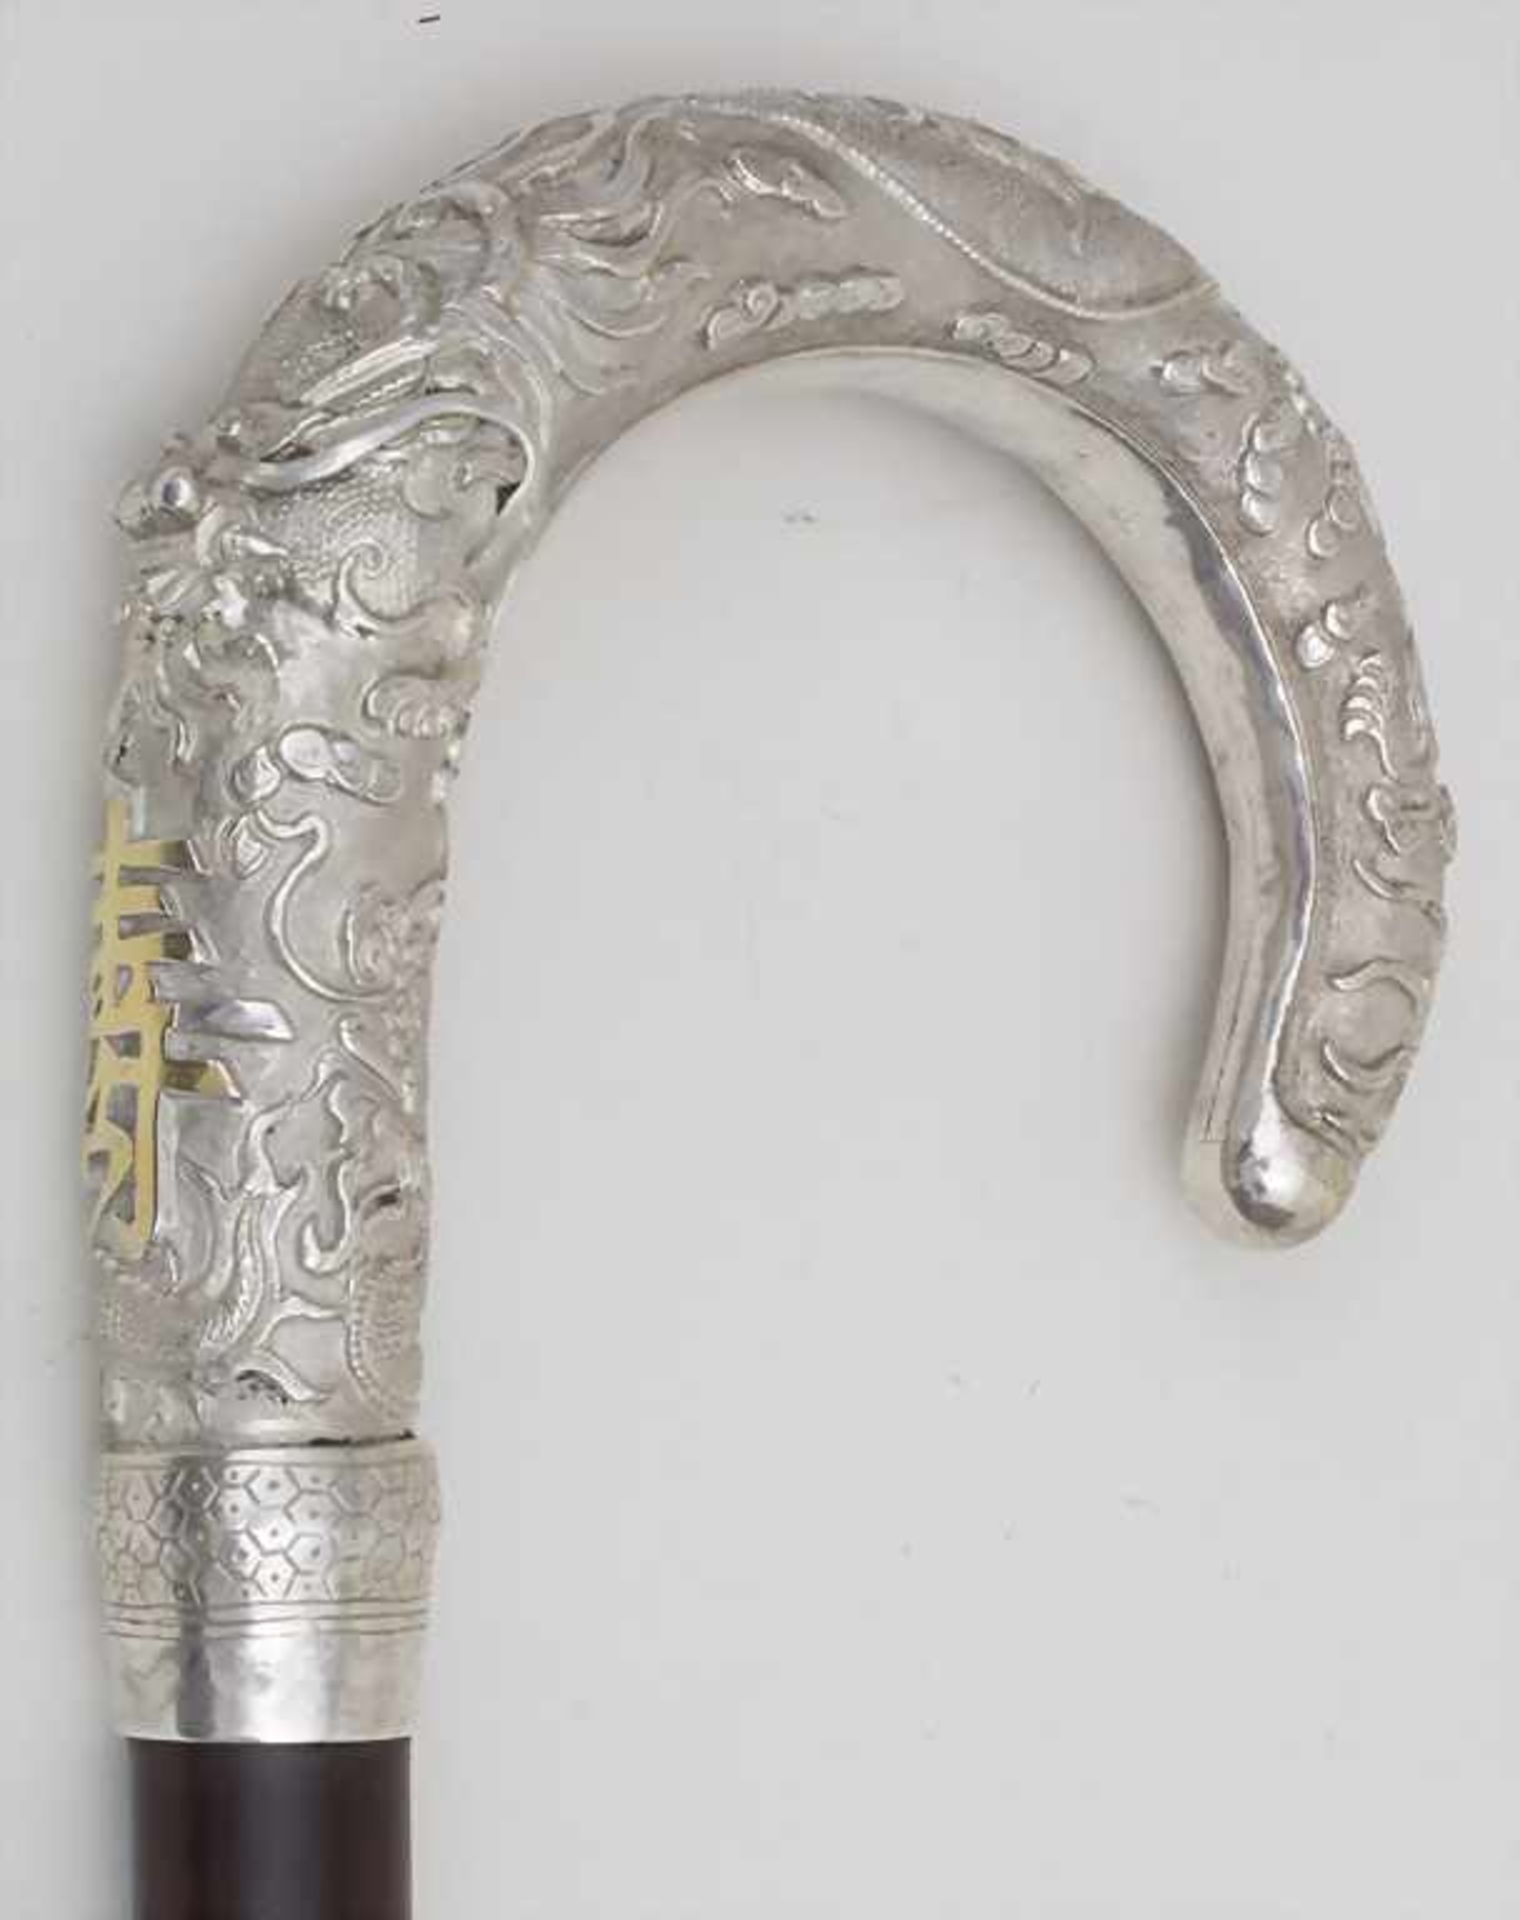 Gehstock mit Drachenmotiv / A cane with dragon handle, China (Hong Kong), um 1900Material: Silber - Bild 3 aus 7